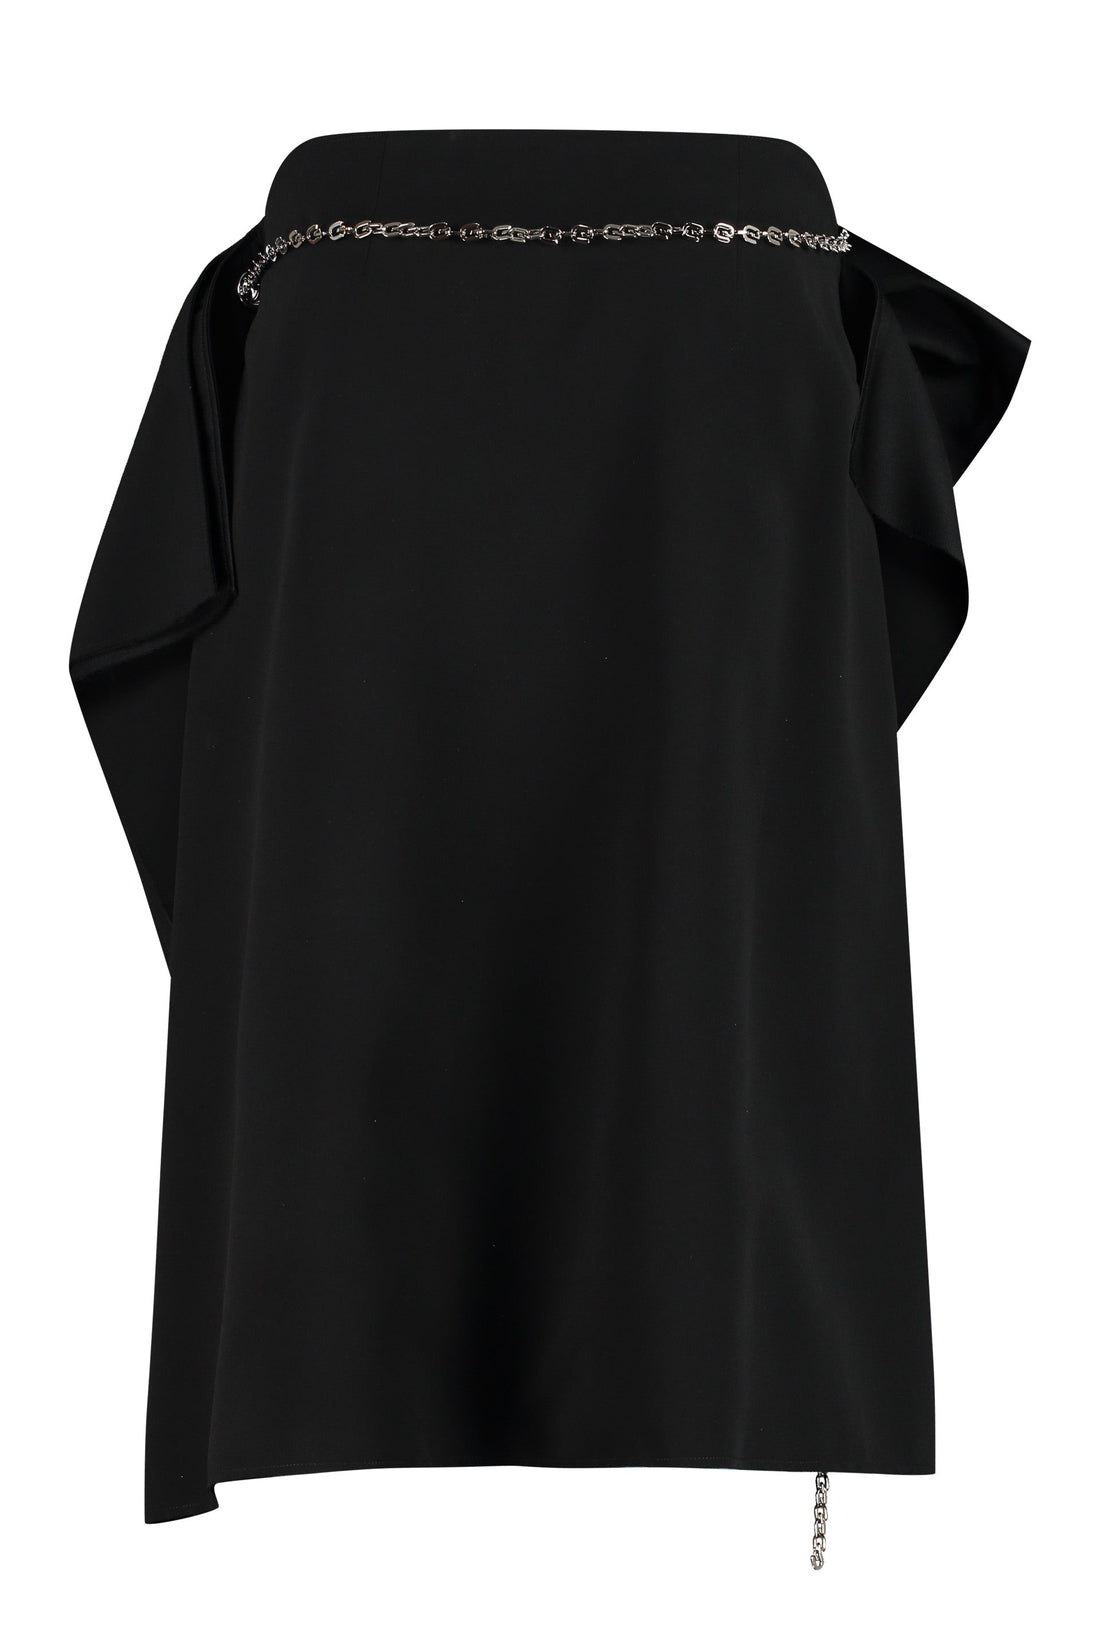 Givenchy-OUTLET-SALE-Asymmetric skirt-ARCHIVIST